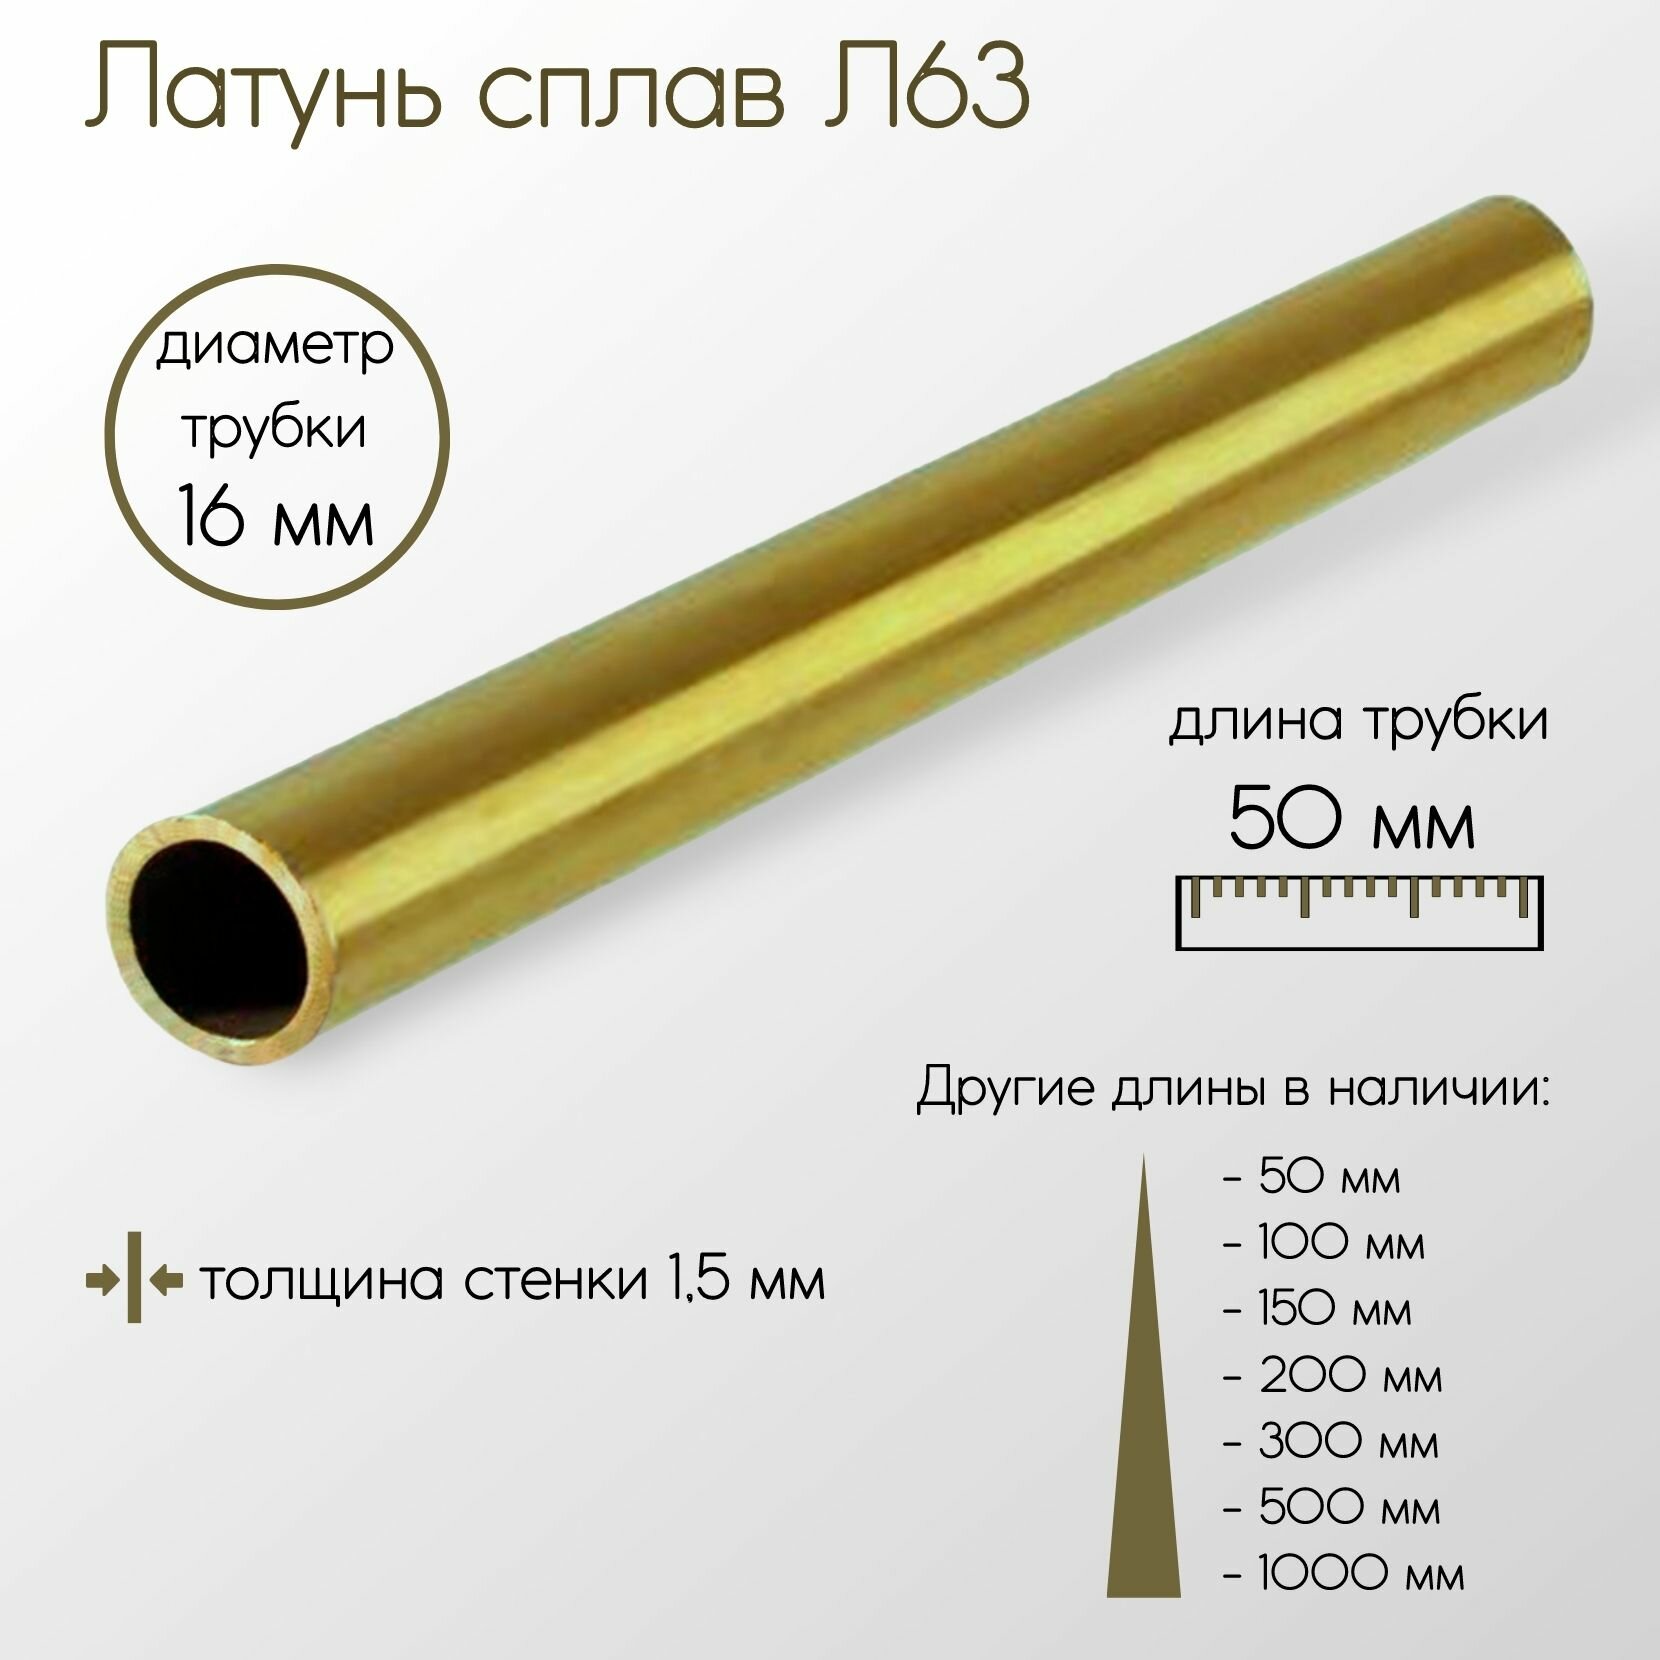 Латунь Л63 труба диаметр 16 мм толщина стенки 1,5 мм 16x1,5x50 мм - фотография № 1